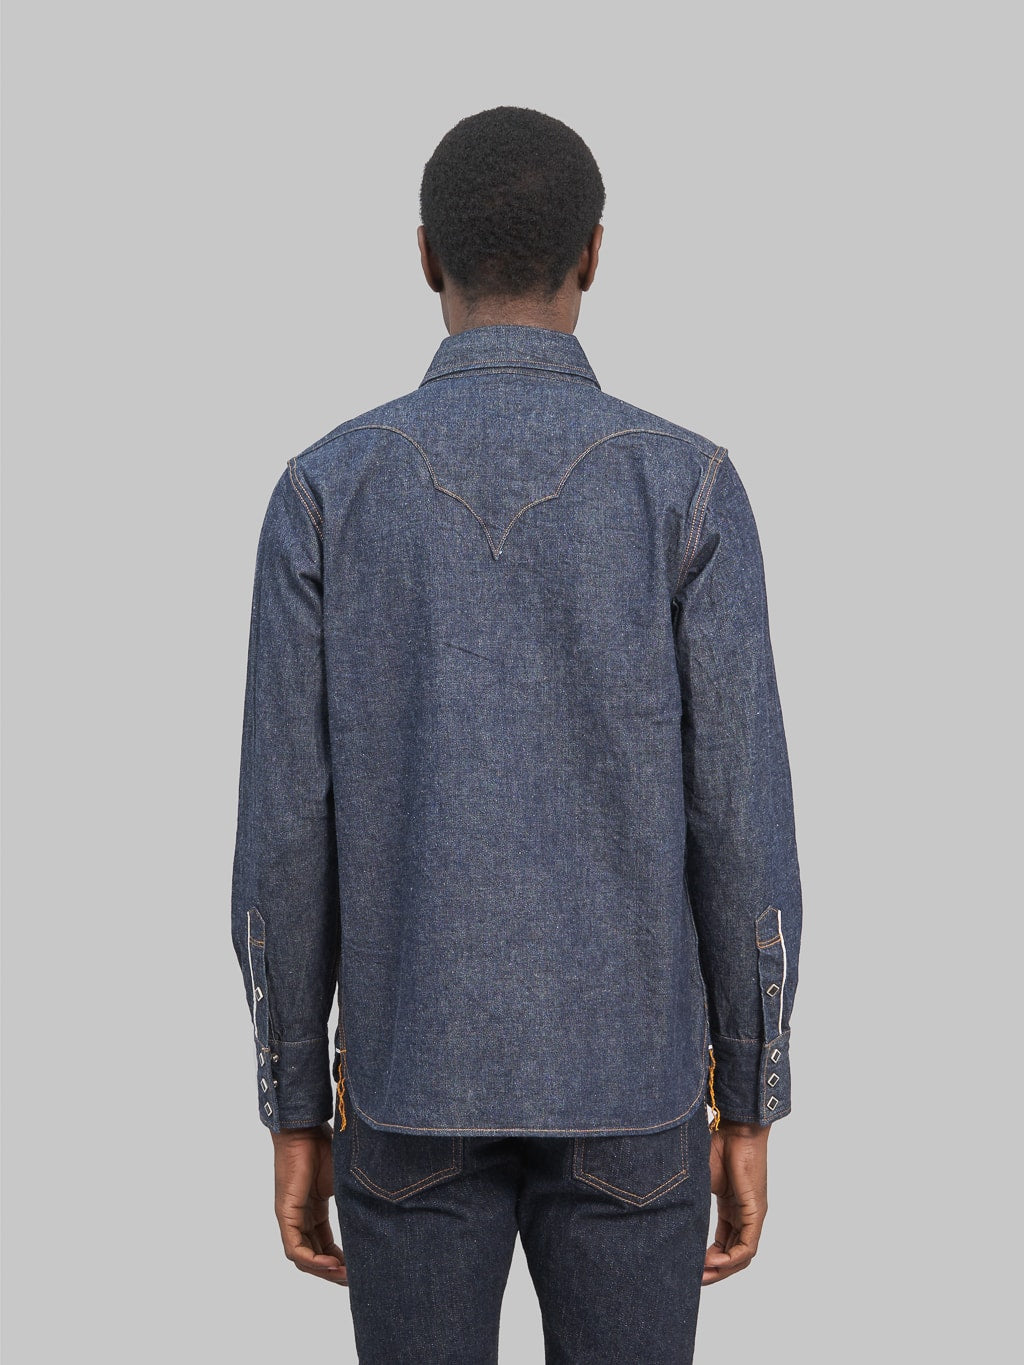 Samurai Jeans 10oz "Hisho SWD-L02" Selvedge Western Denim Shirt